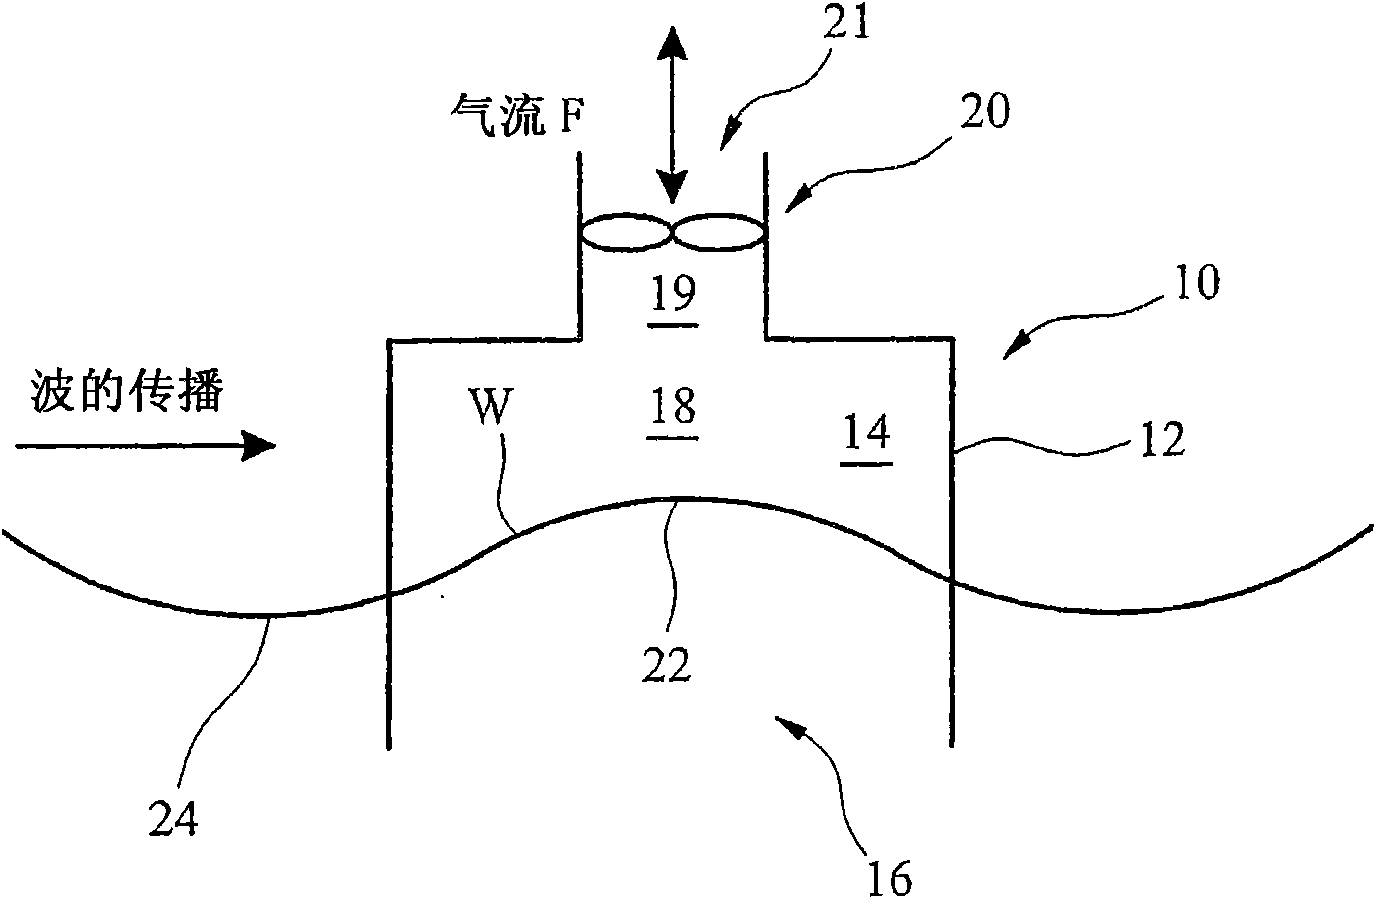 Impulse turbine for use in bi-directional flows